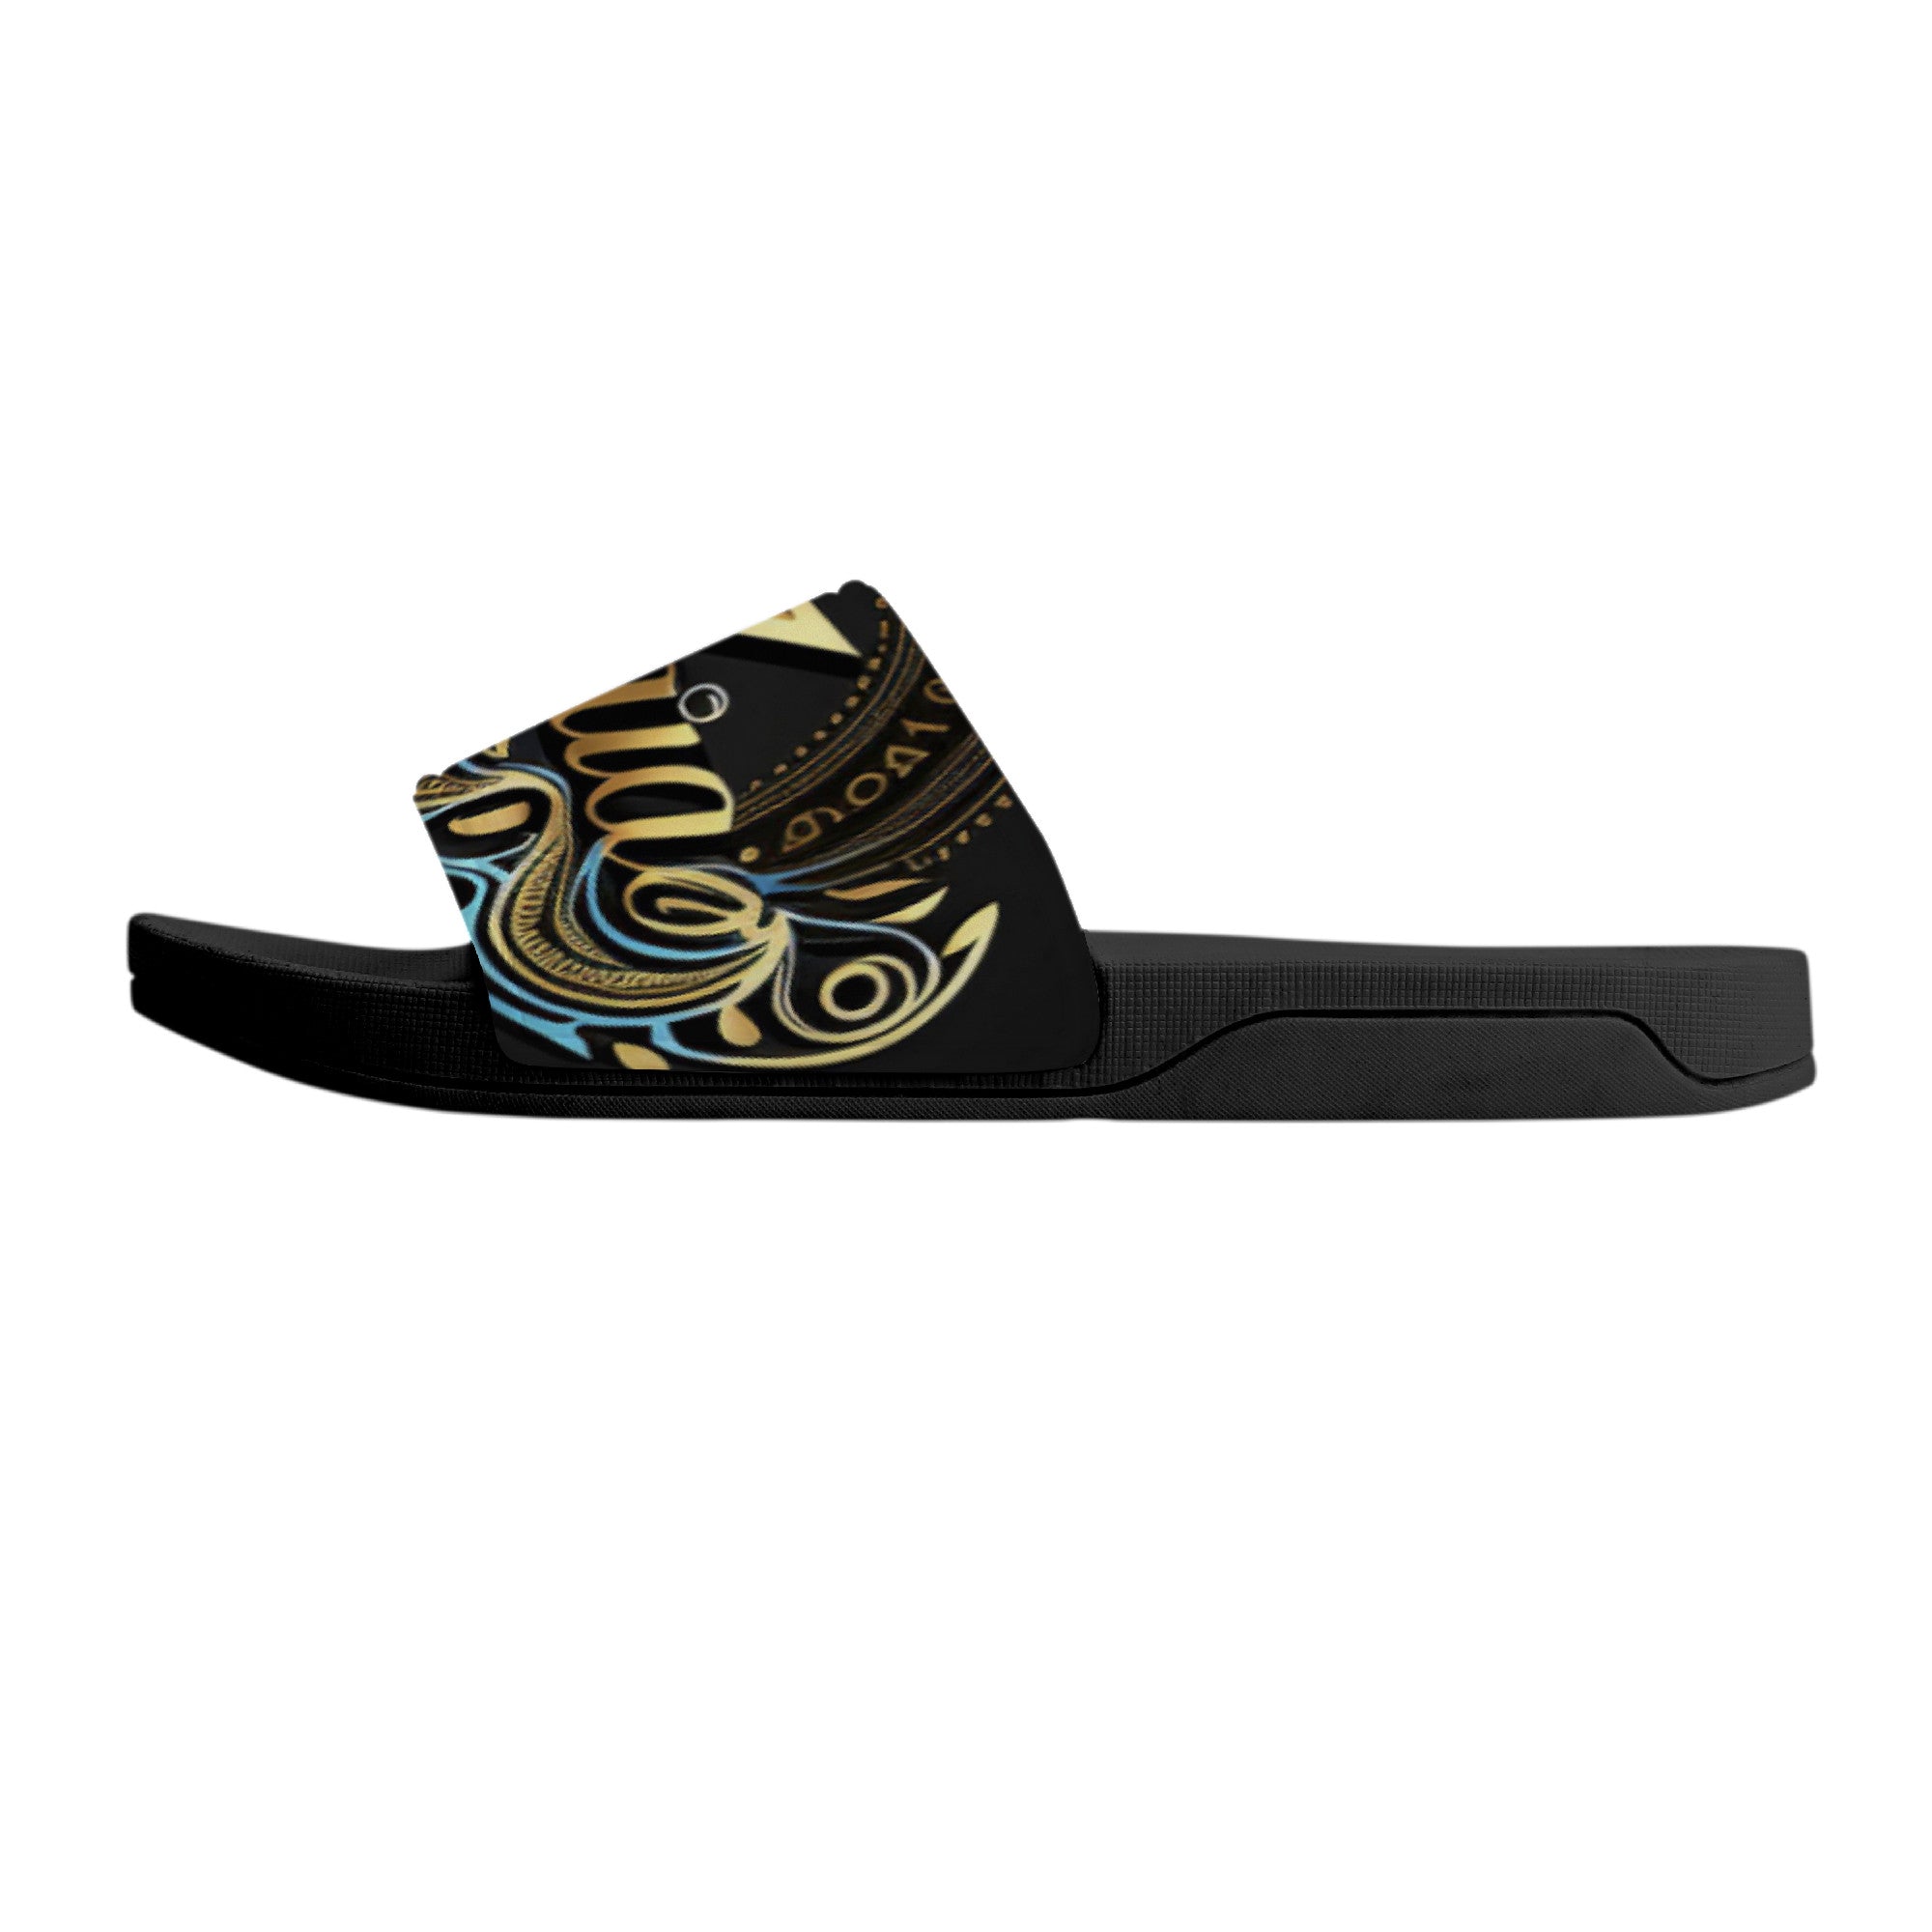 Peace and Love - Italy Black and Gold Custom Slide Sandals - By the creator Nadav Gadalia - Shoe Zero